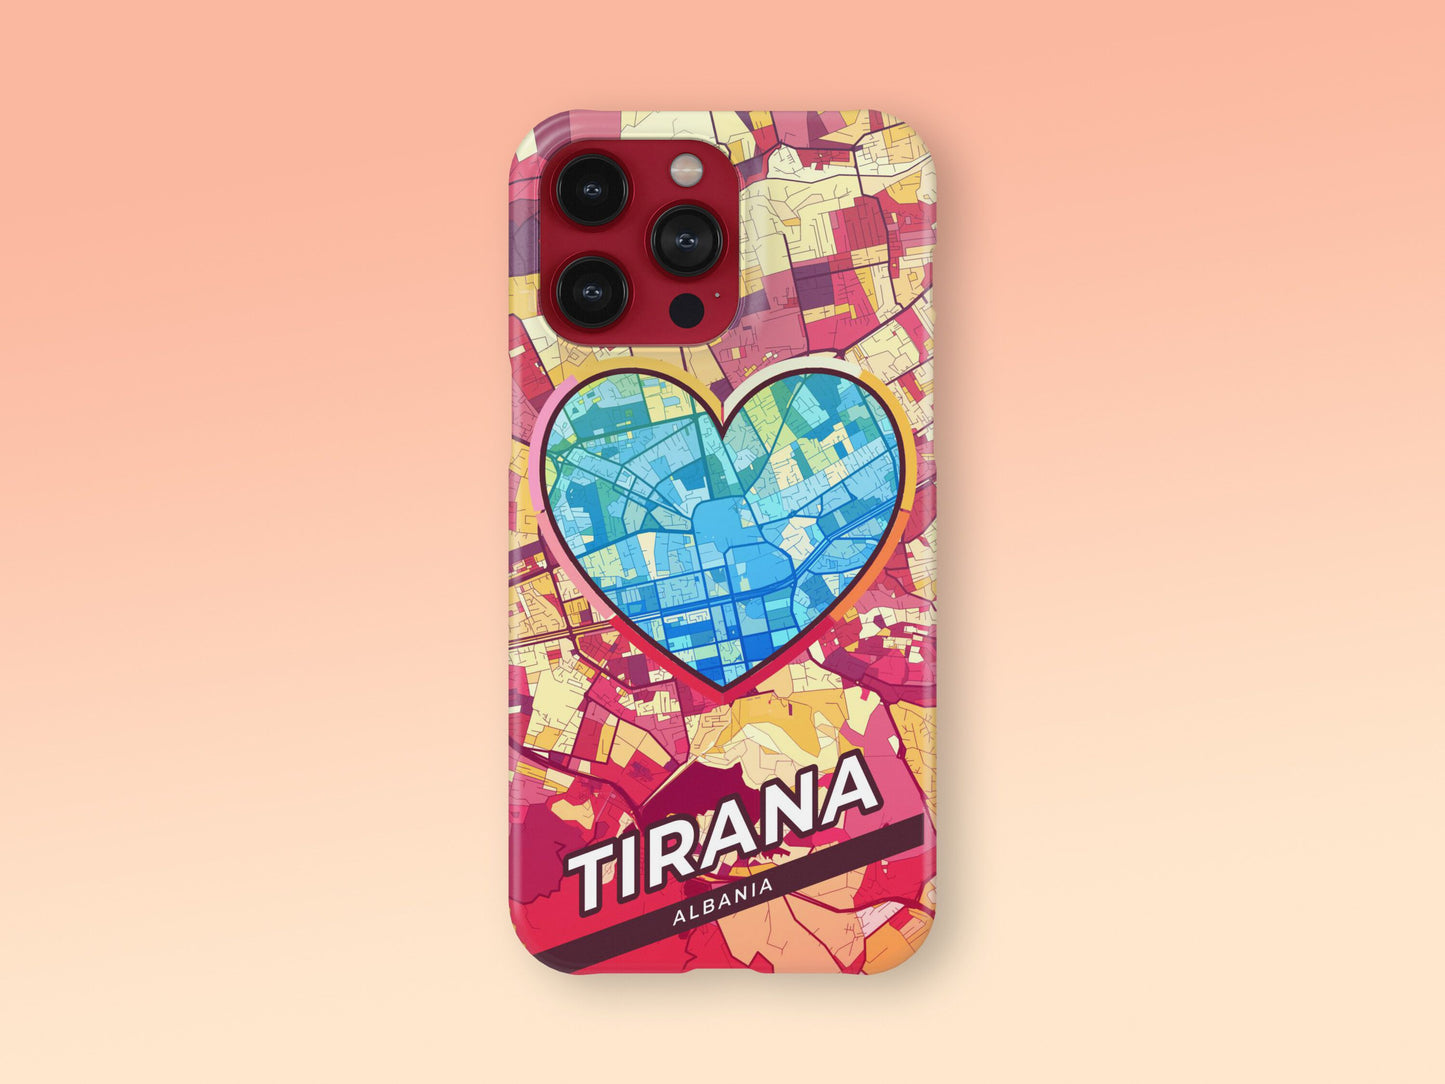 Tirana Albania slim phone case with colorful icon. Birthday, wedding or housewarming gift. Couple match cases. 2